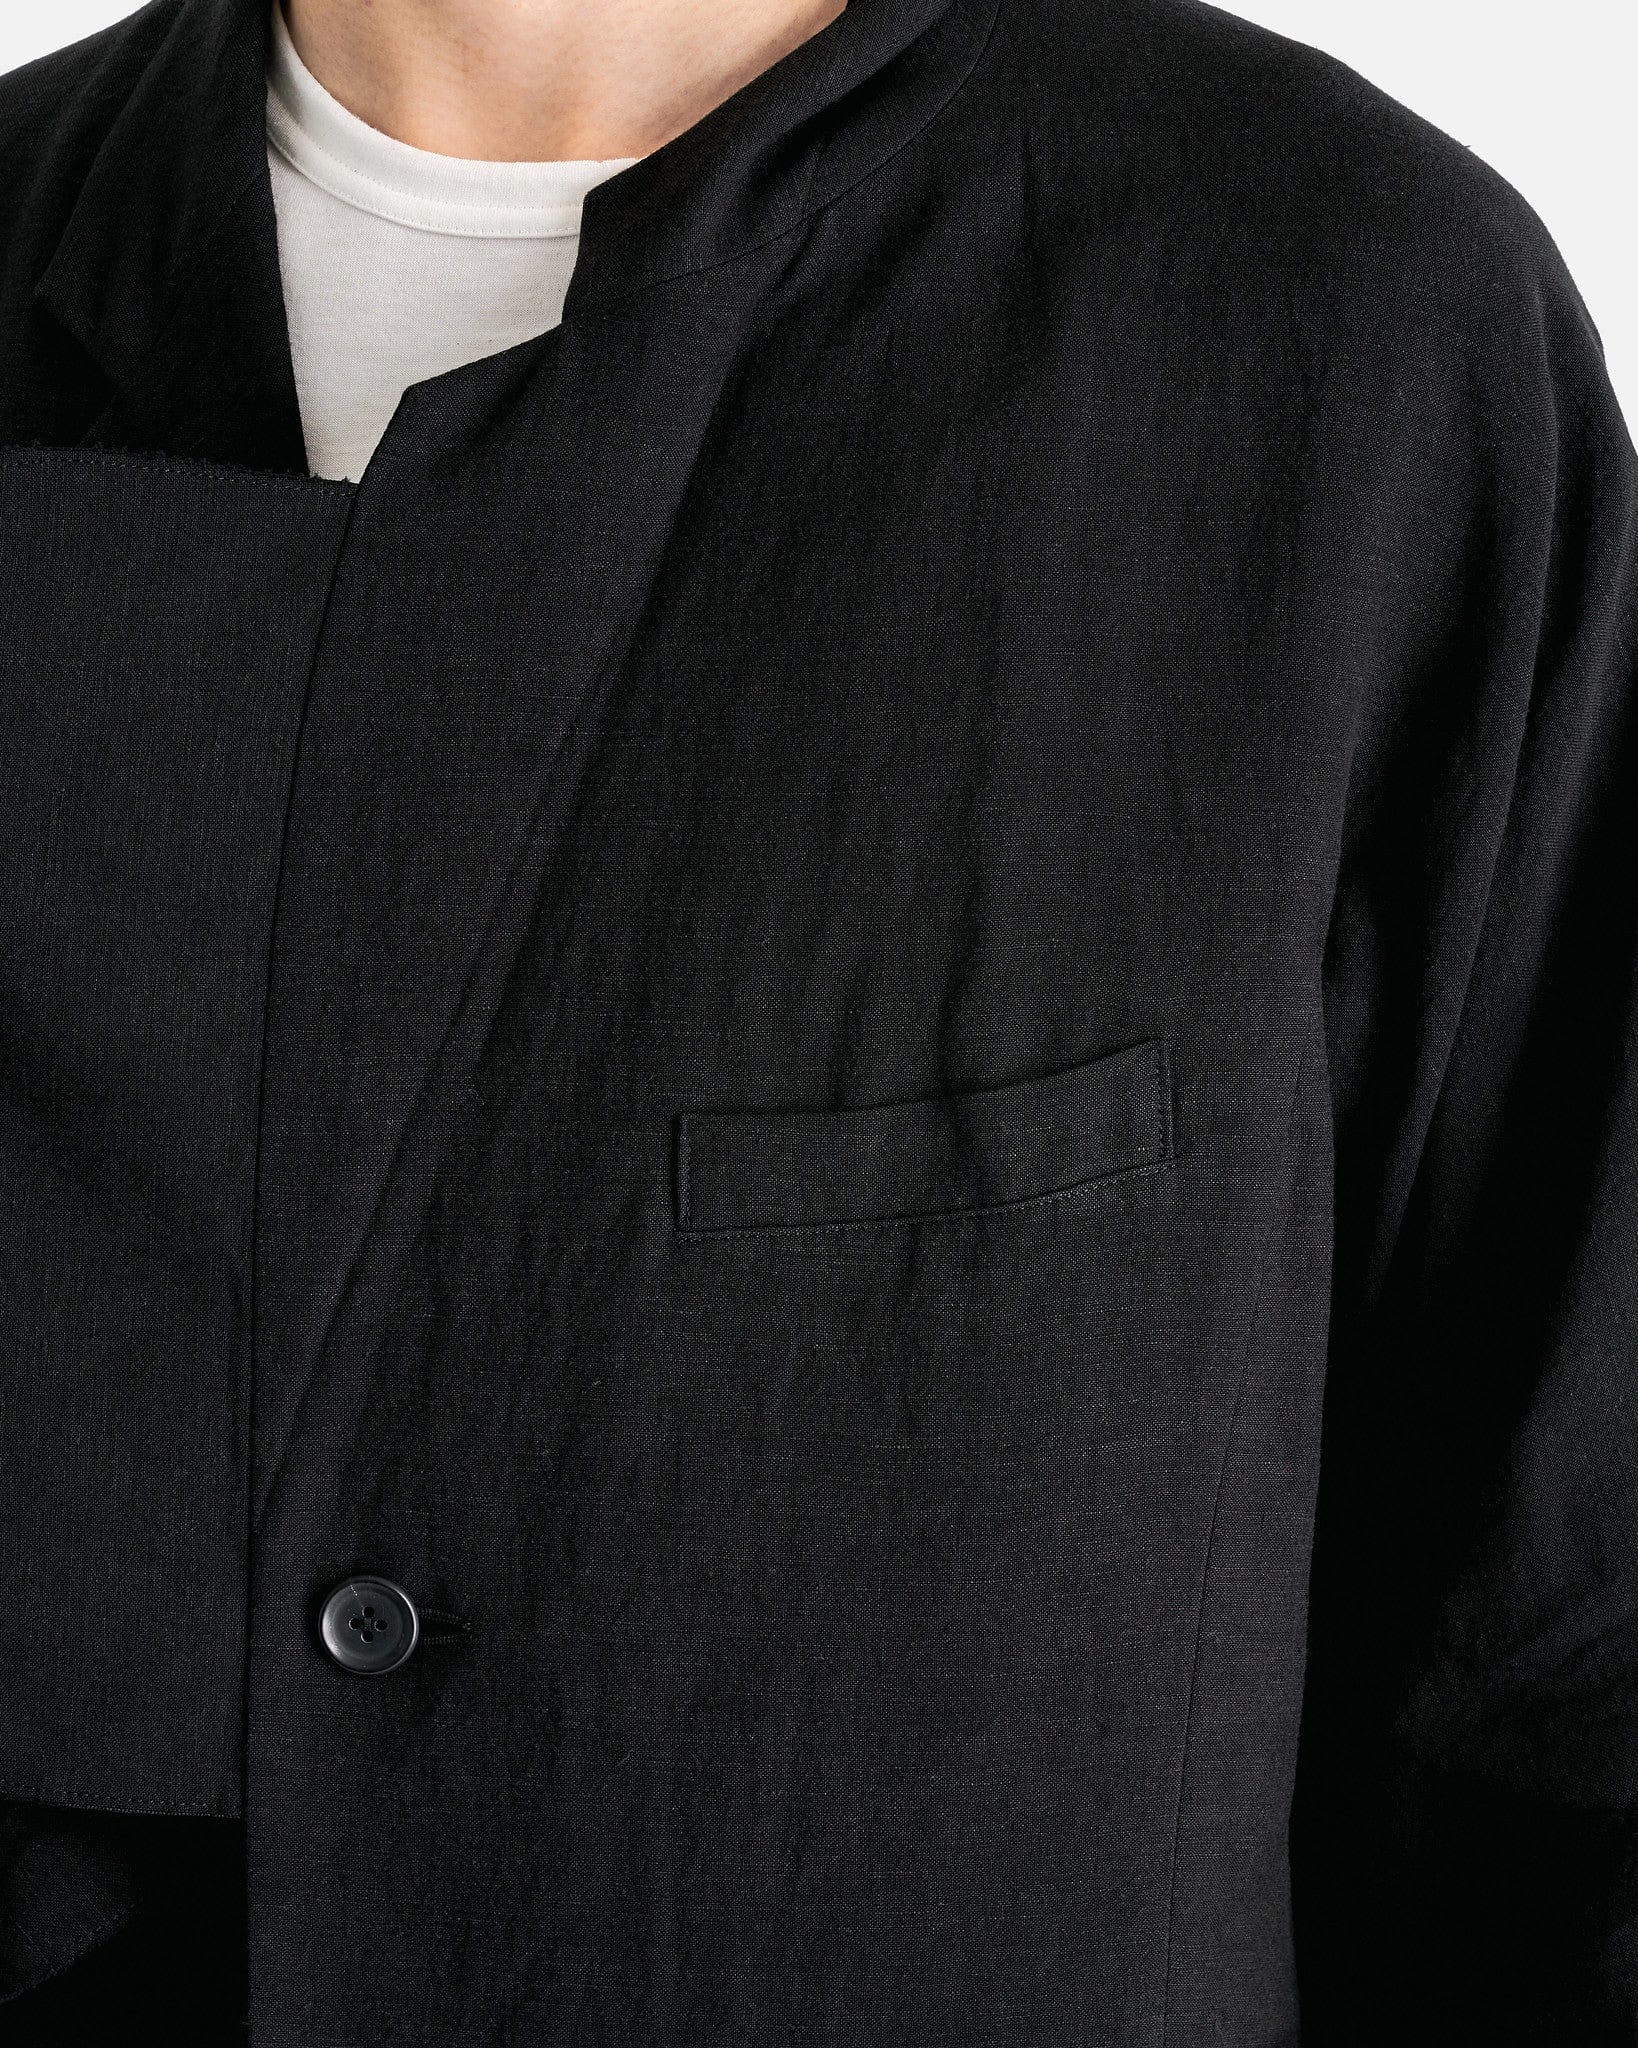 Yohji Yamamoto Pour Homme Men's Jackets I-Unfixed Safety Pin Jacket in Black